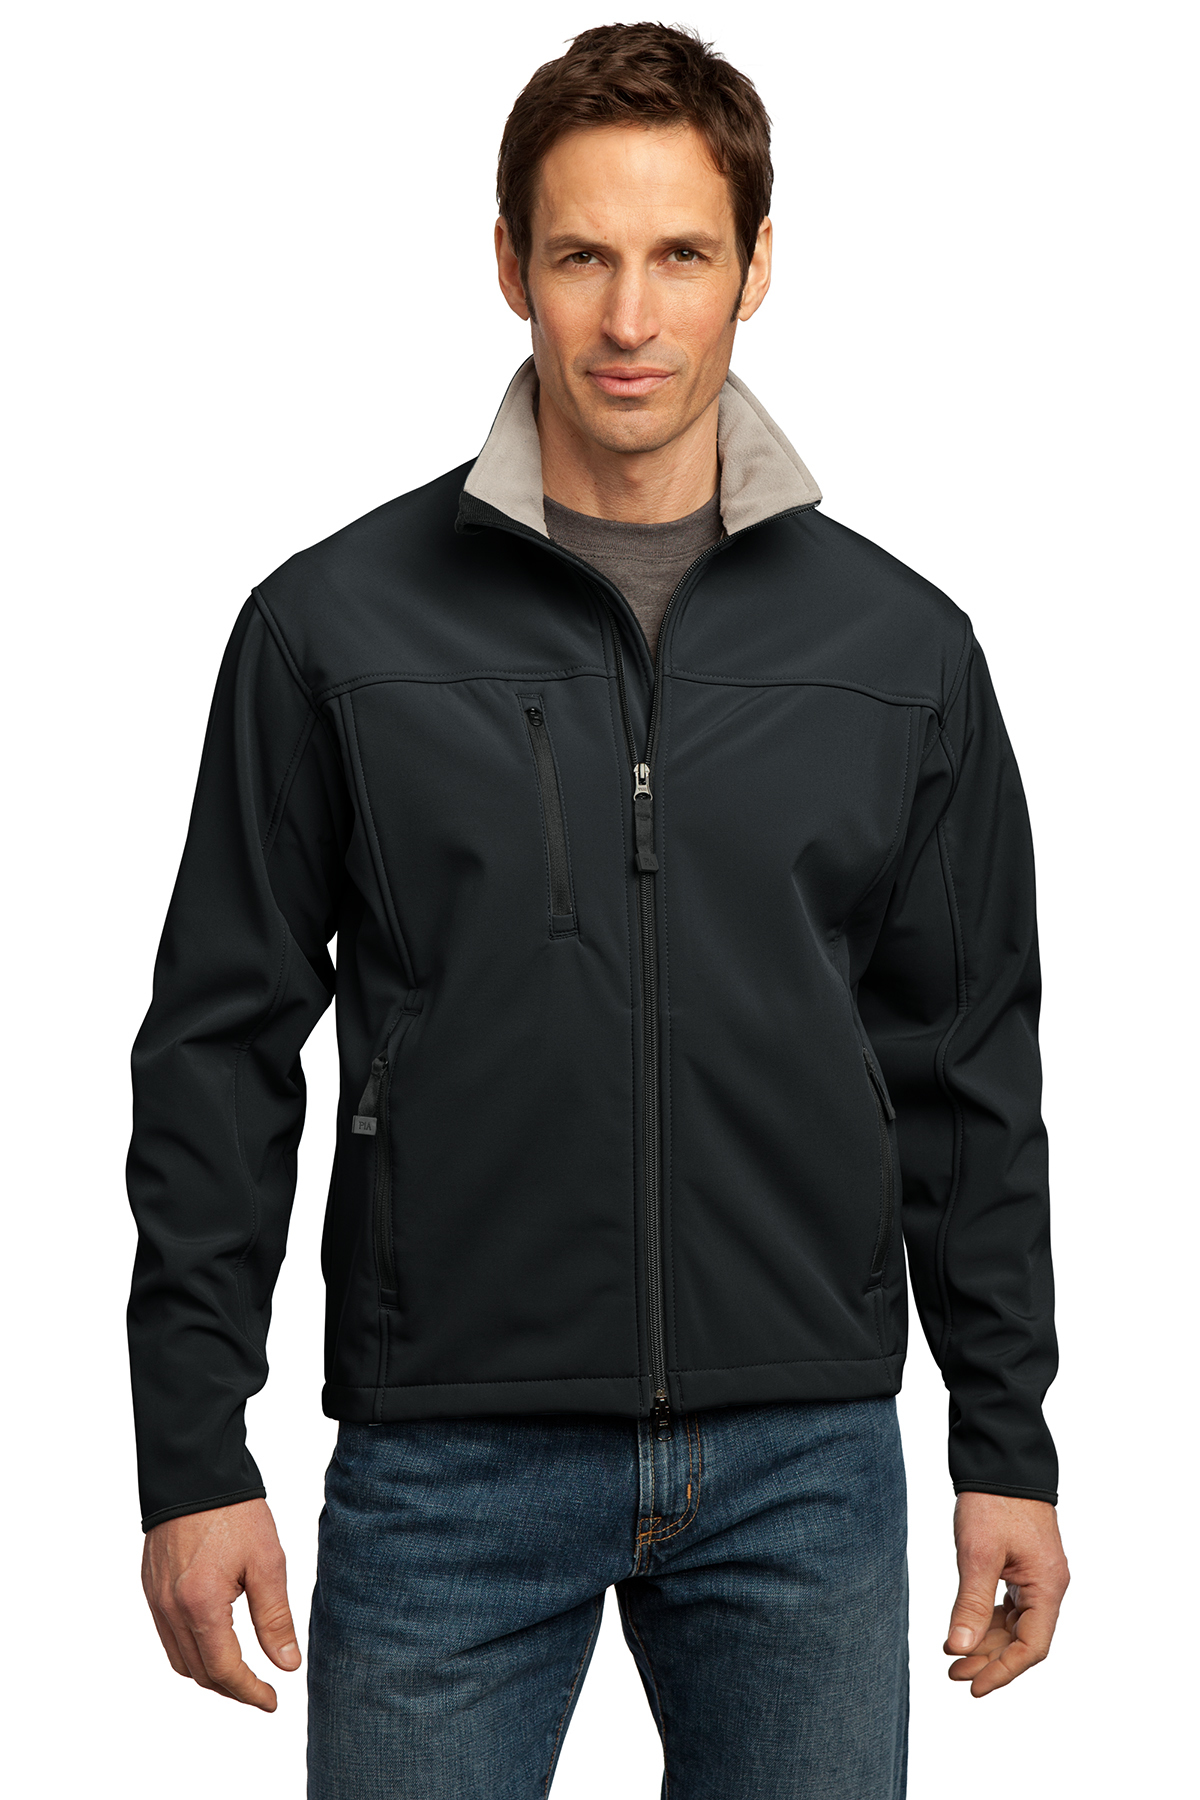 Port Authority® TLJ790 - Tall Glacier Soft Shell Jacket